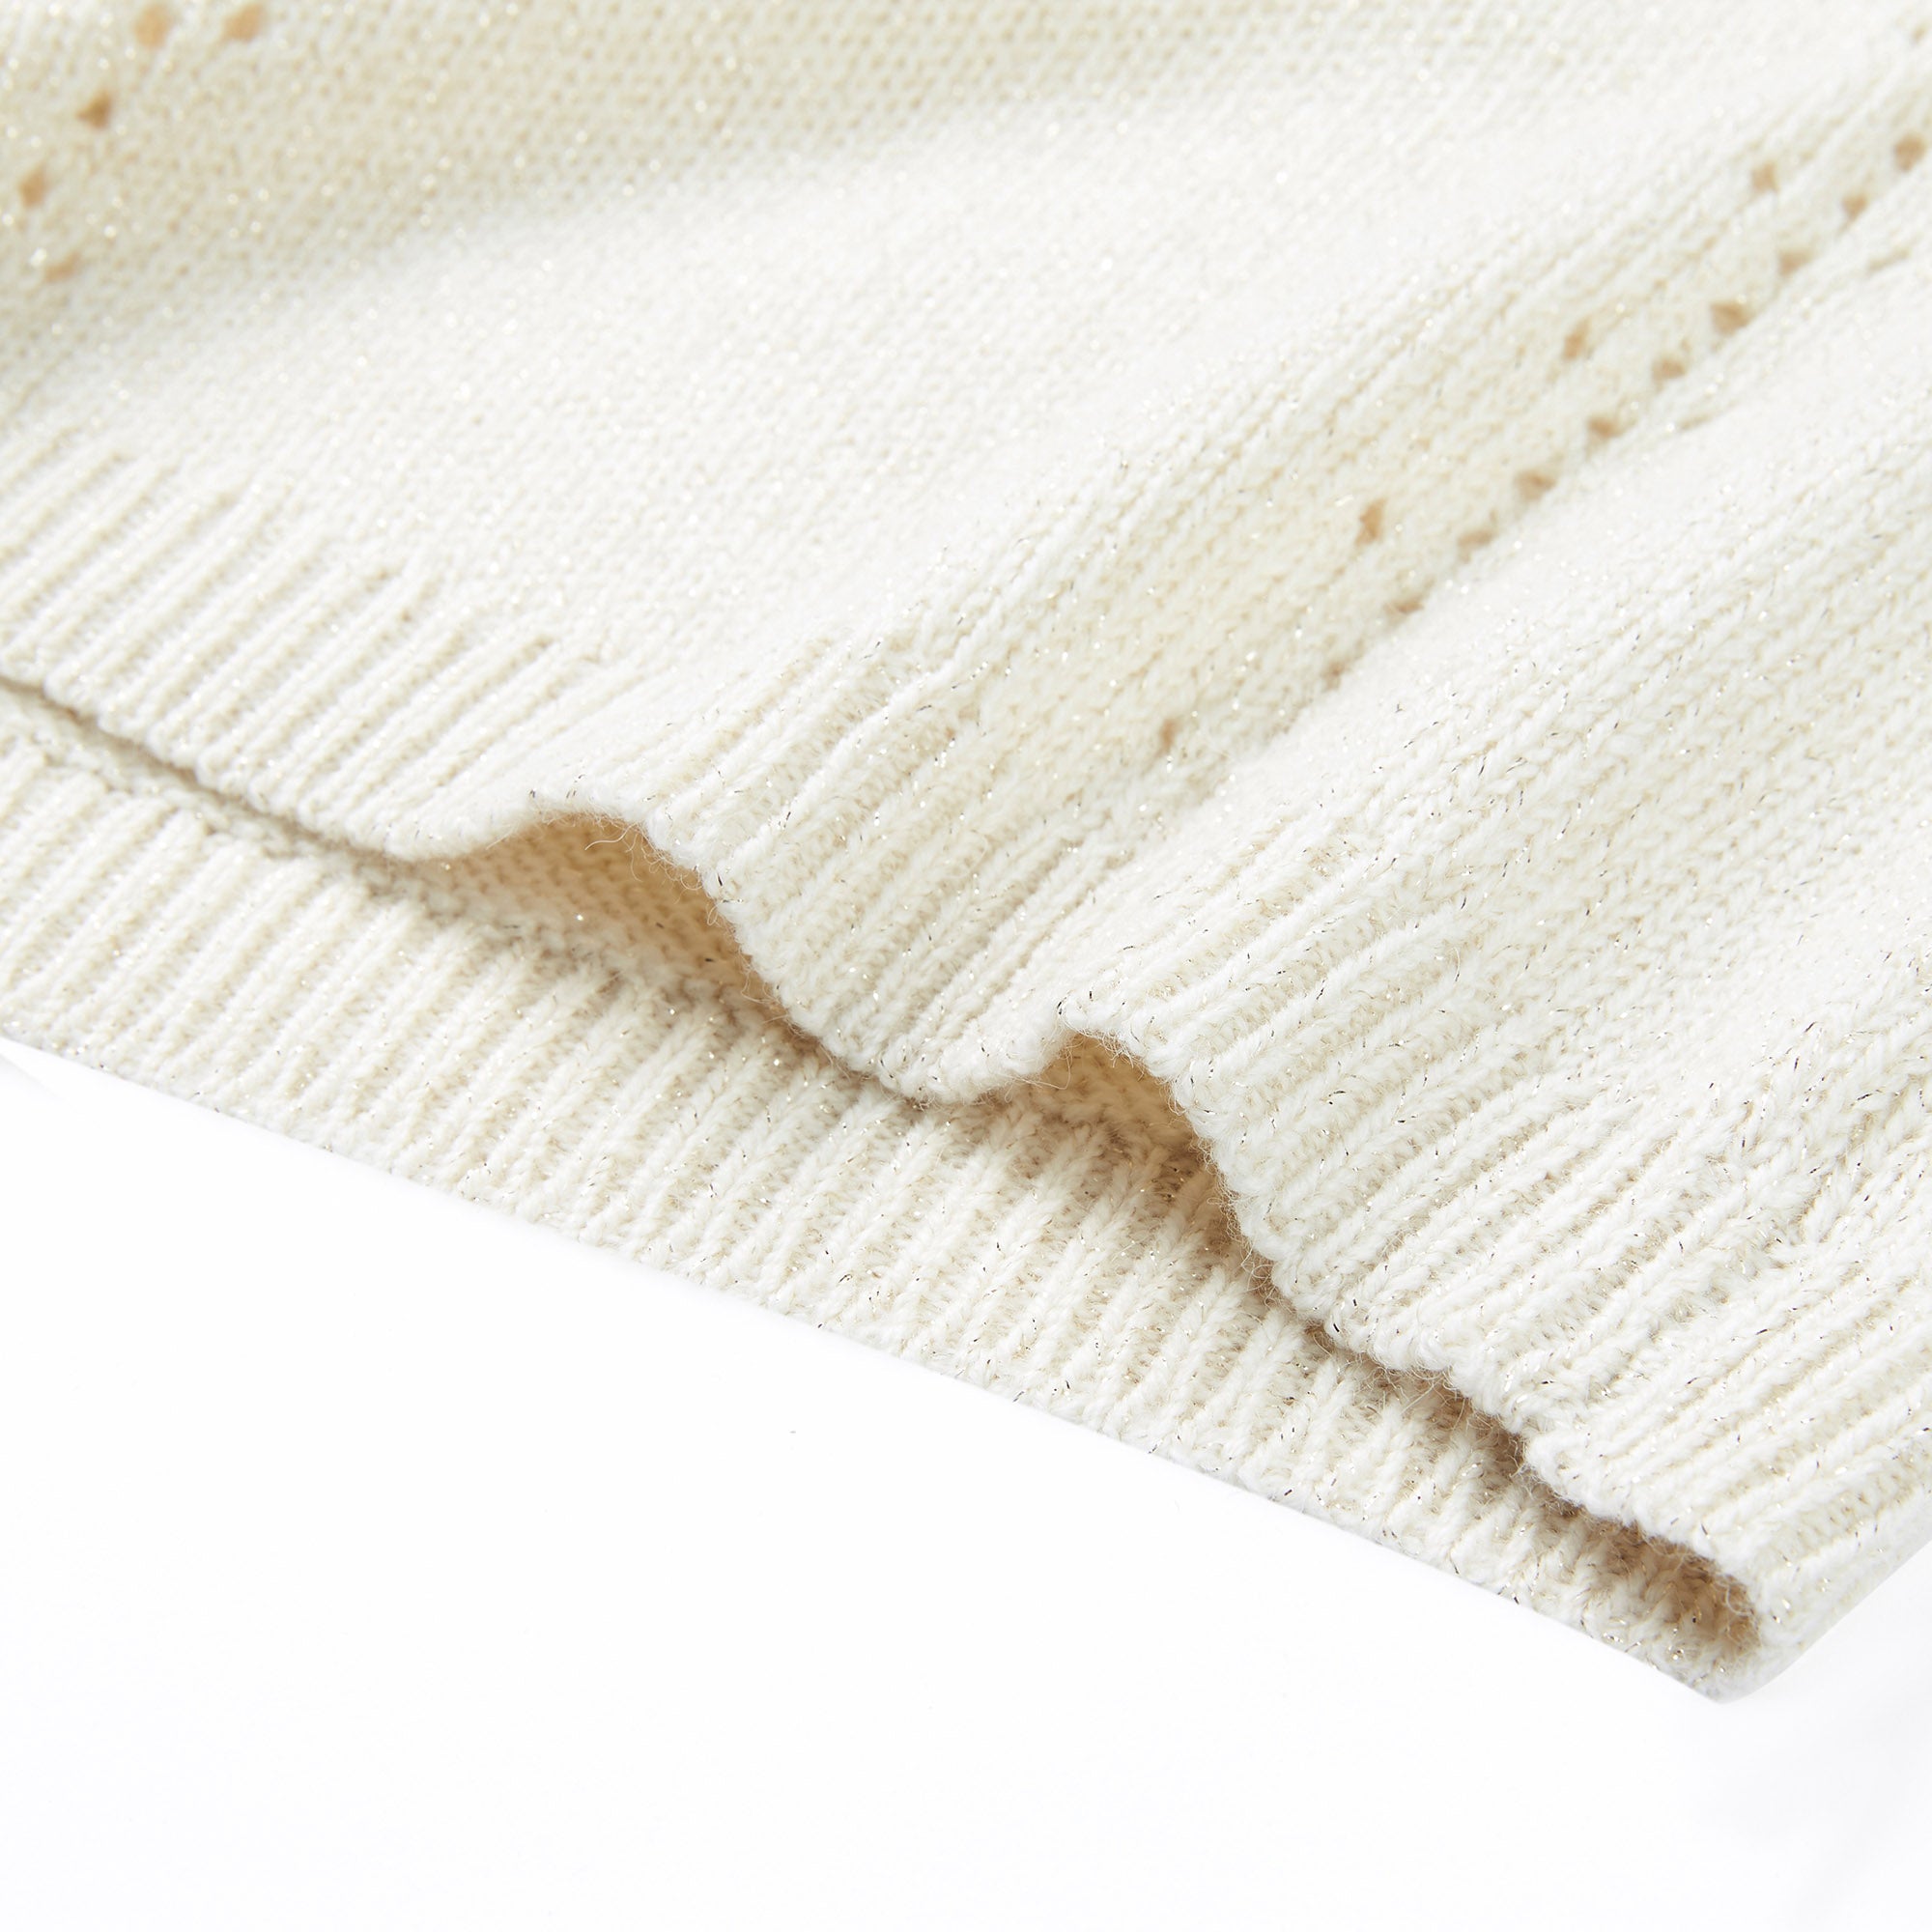 Girls White Frill Wool Sweater